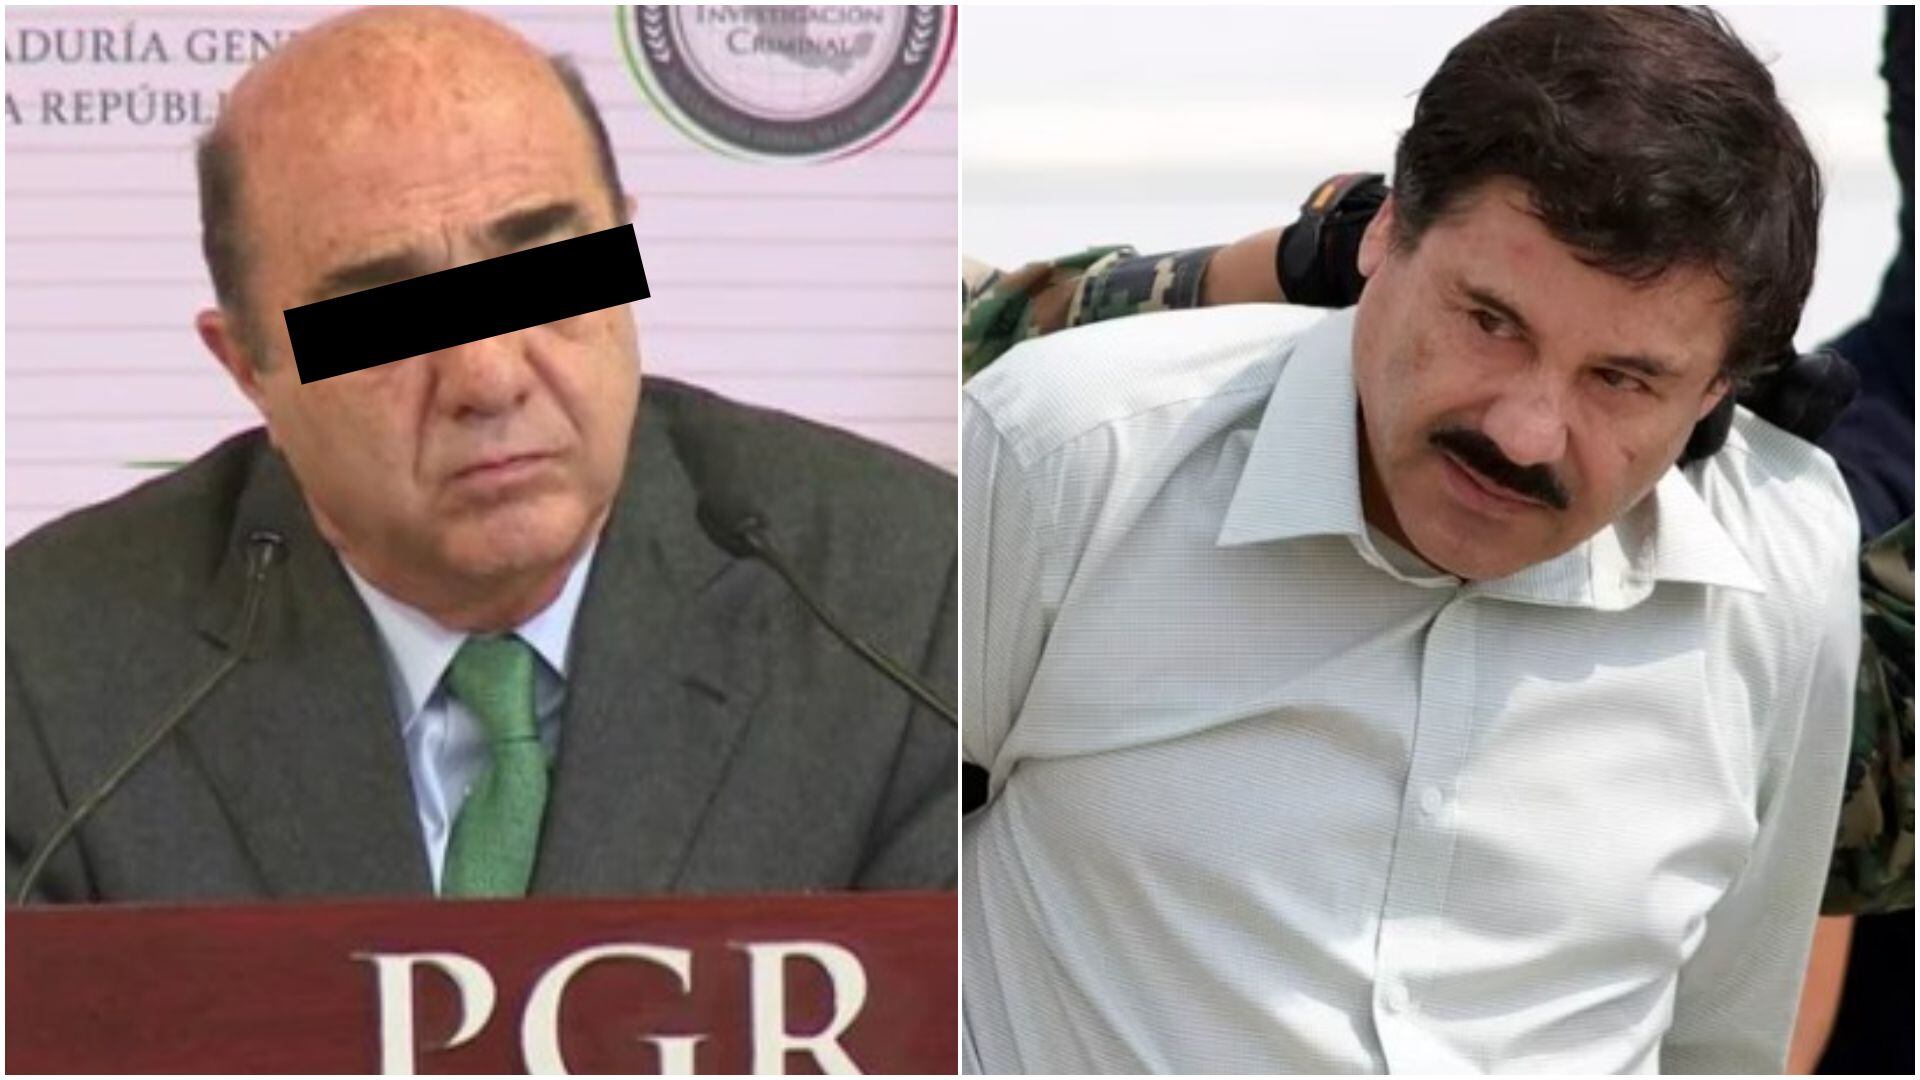 Murillo Karam, El Chapo Guzmán